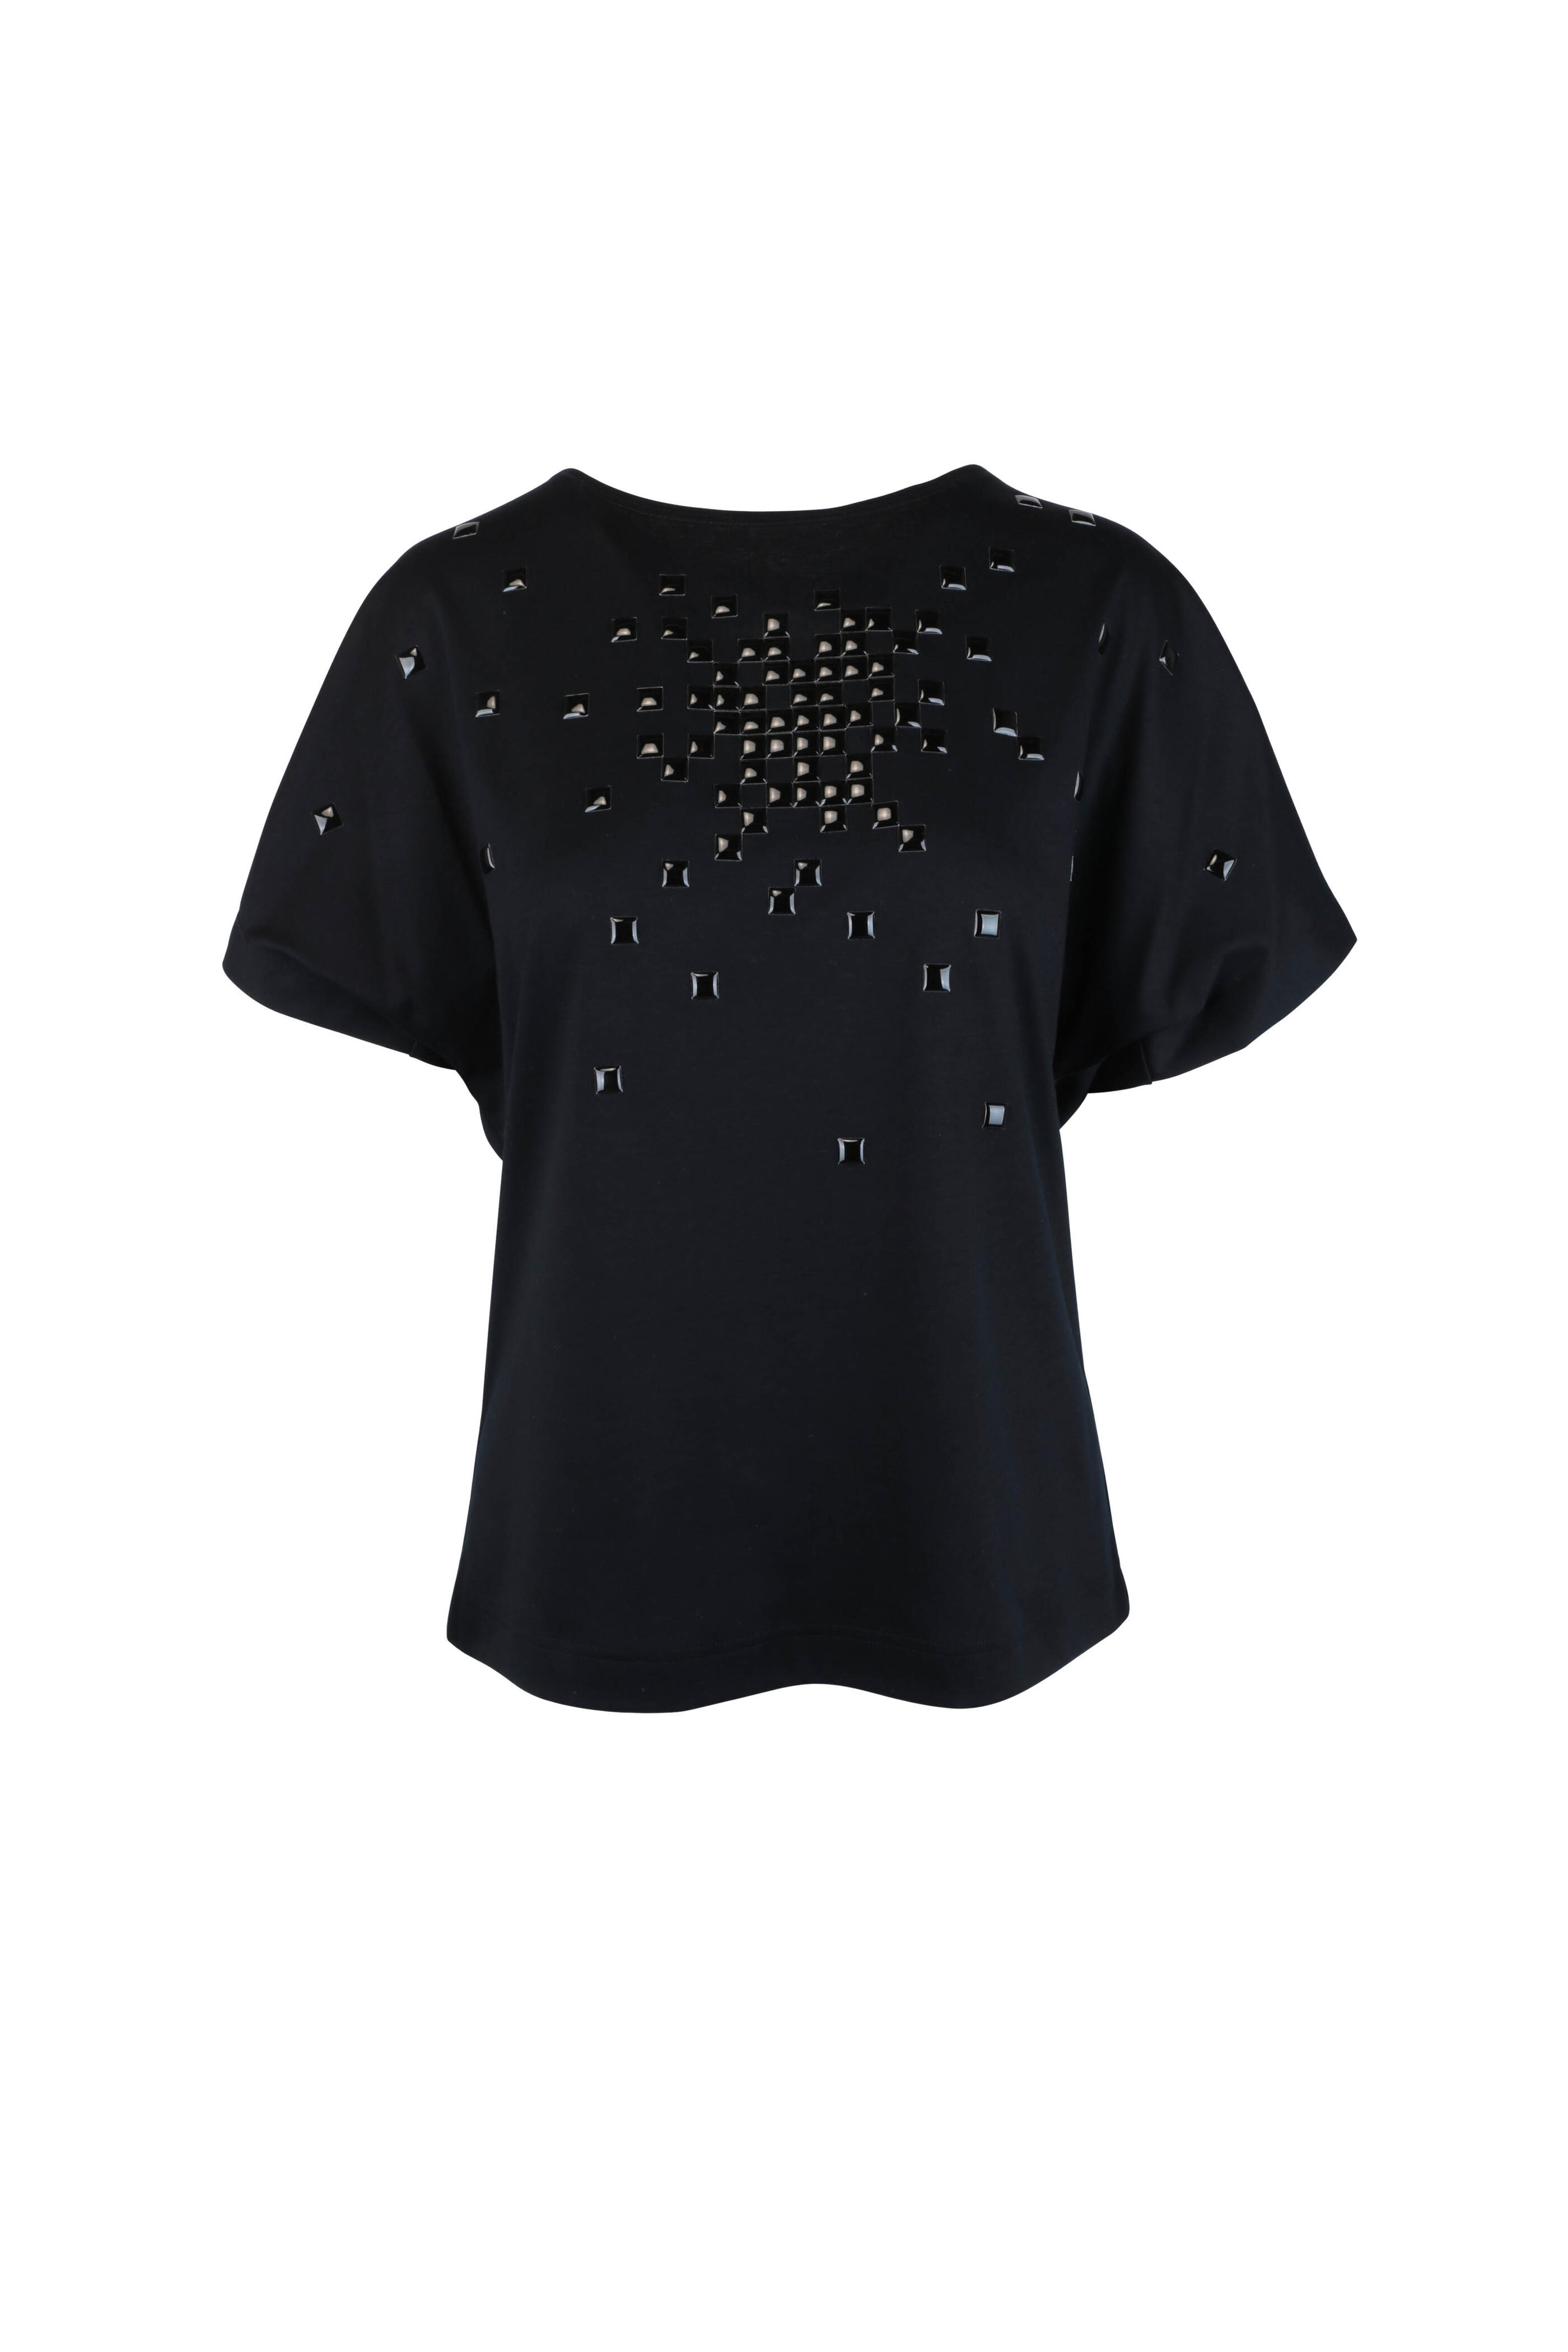 Akris Punto - Black Pixel Stud T-Shirt Stores